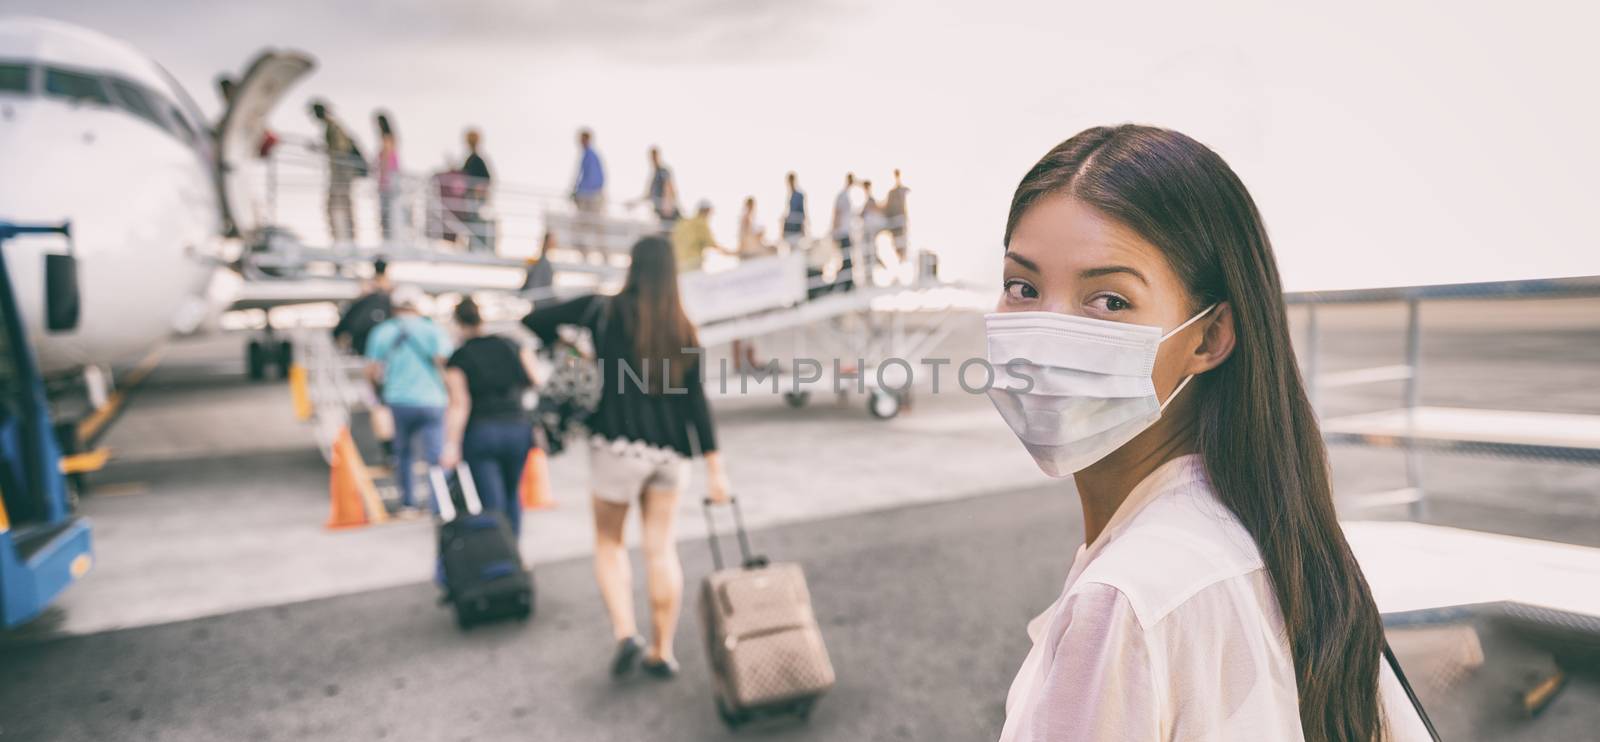 Airport Asian woman tourist boarding plane taking a flight in China wearing face mask. Coronavirus flu virus travel concept banner panorama.